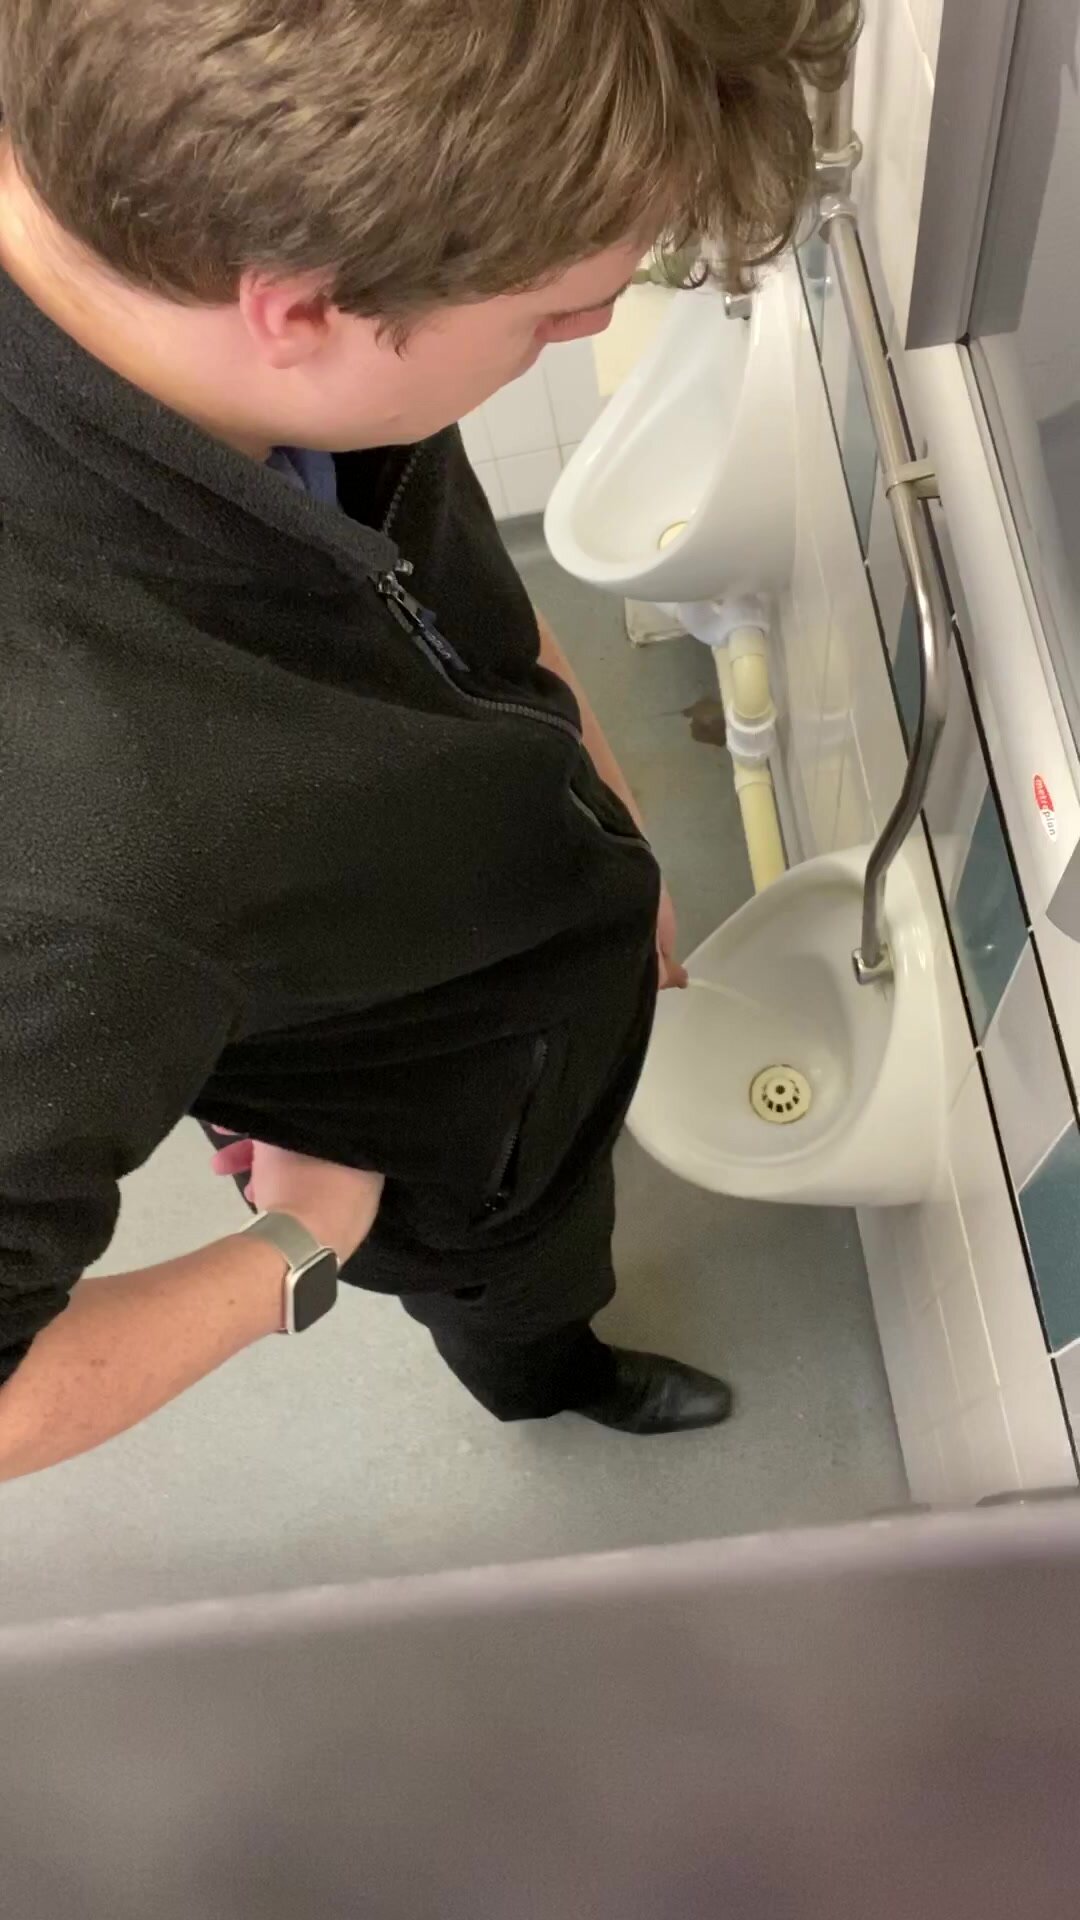 Spy on guy peeing over stall urinal